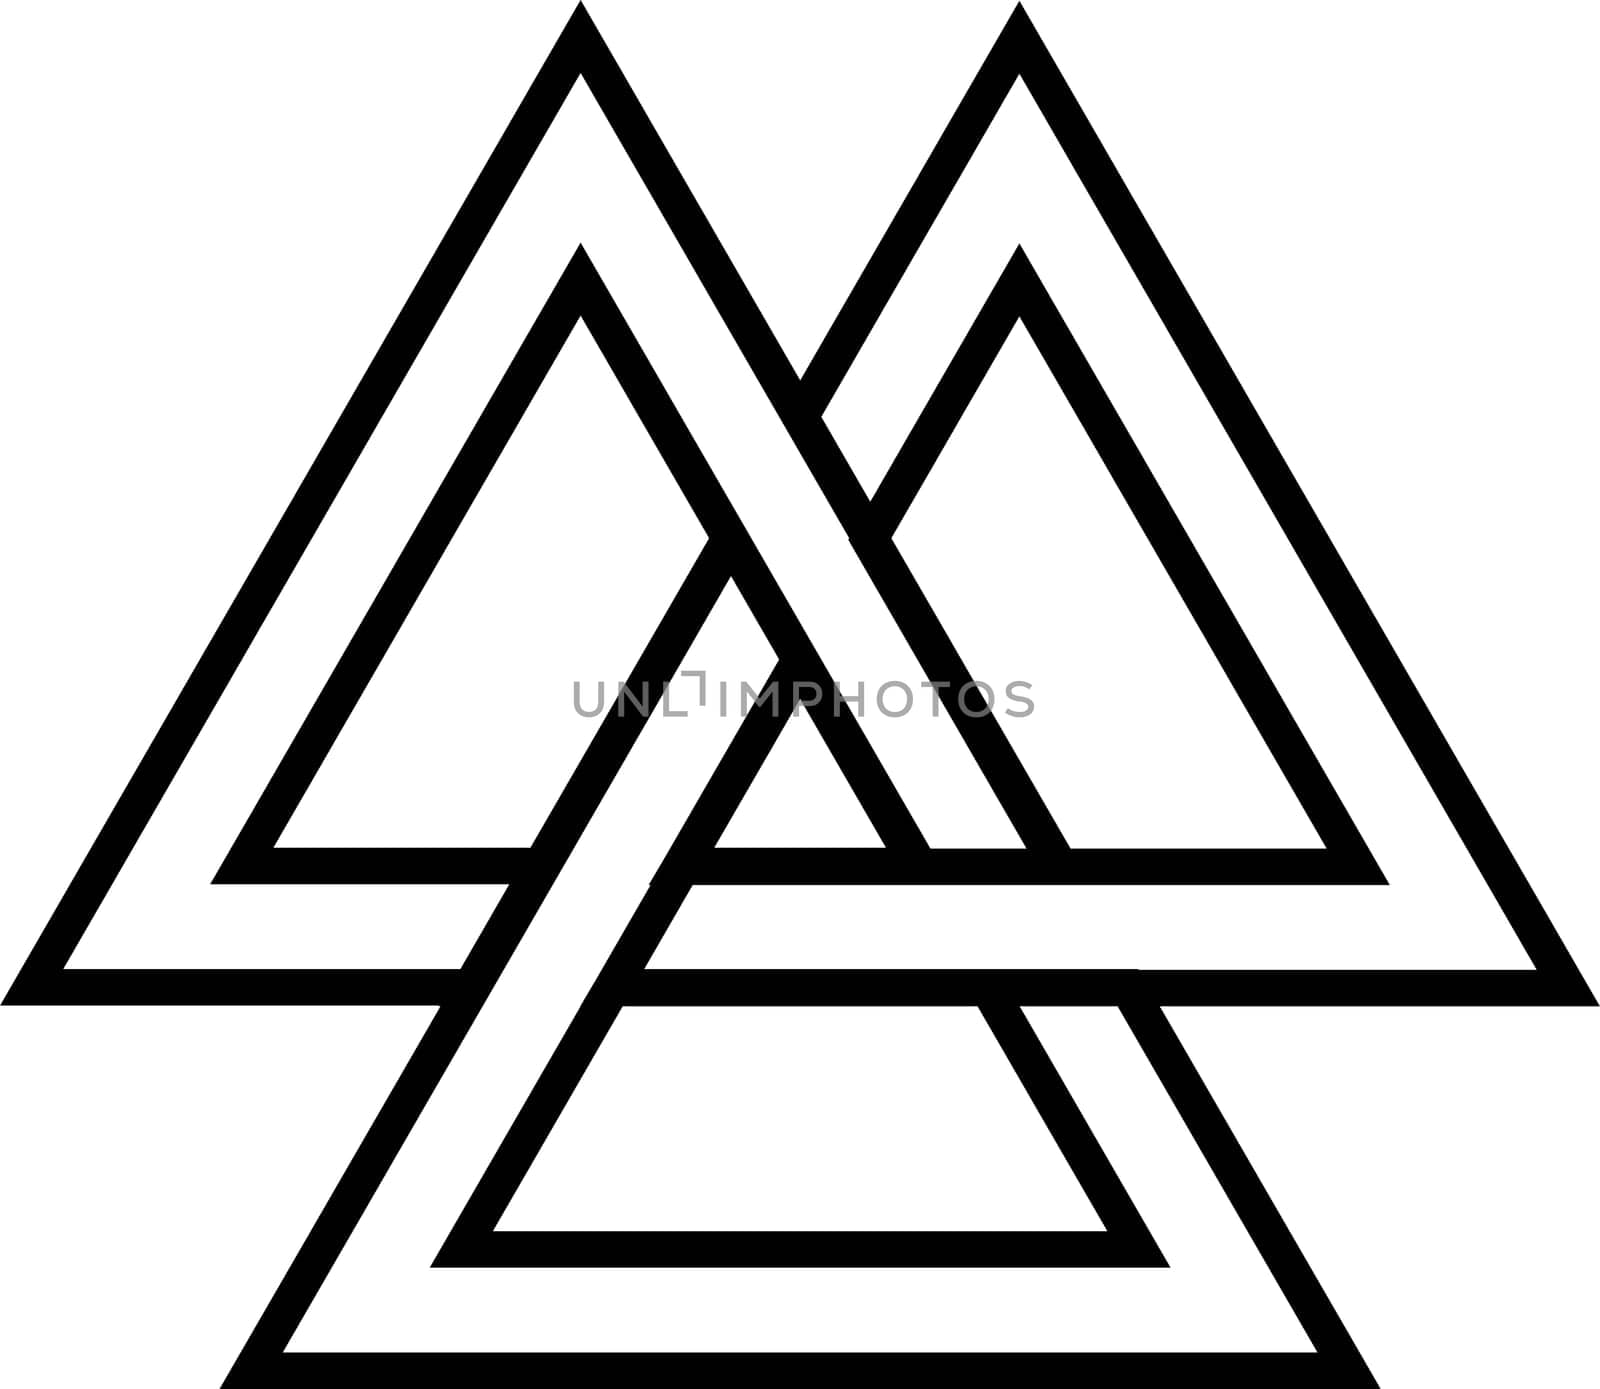 Valknut Viking Age symbol, geometric design element Norse warrior culture by koksikoks